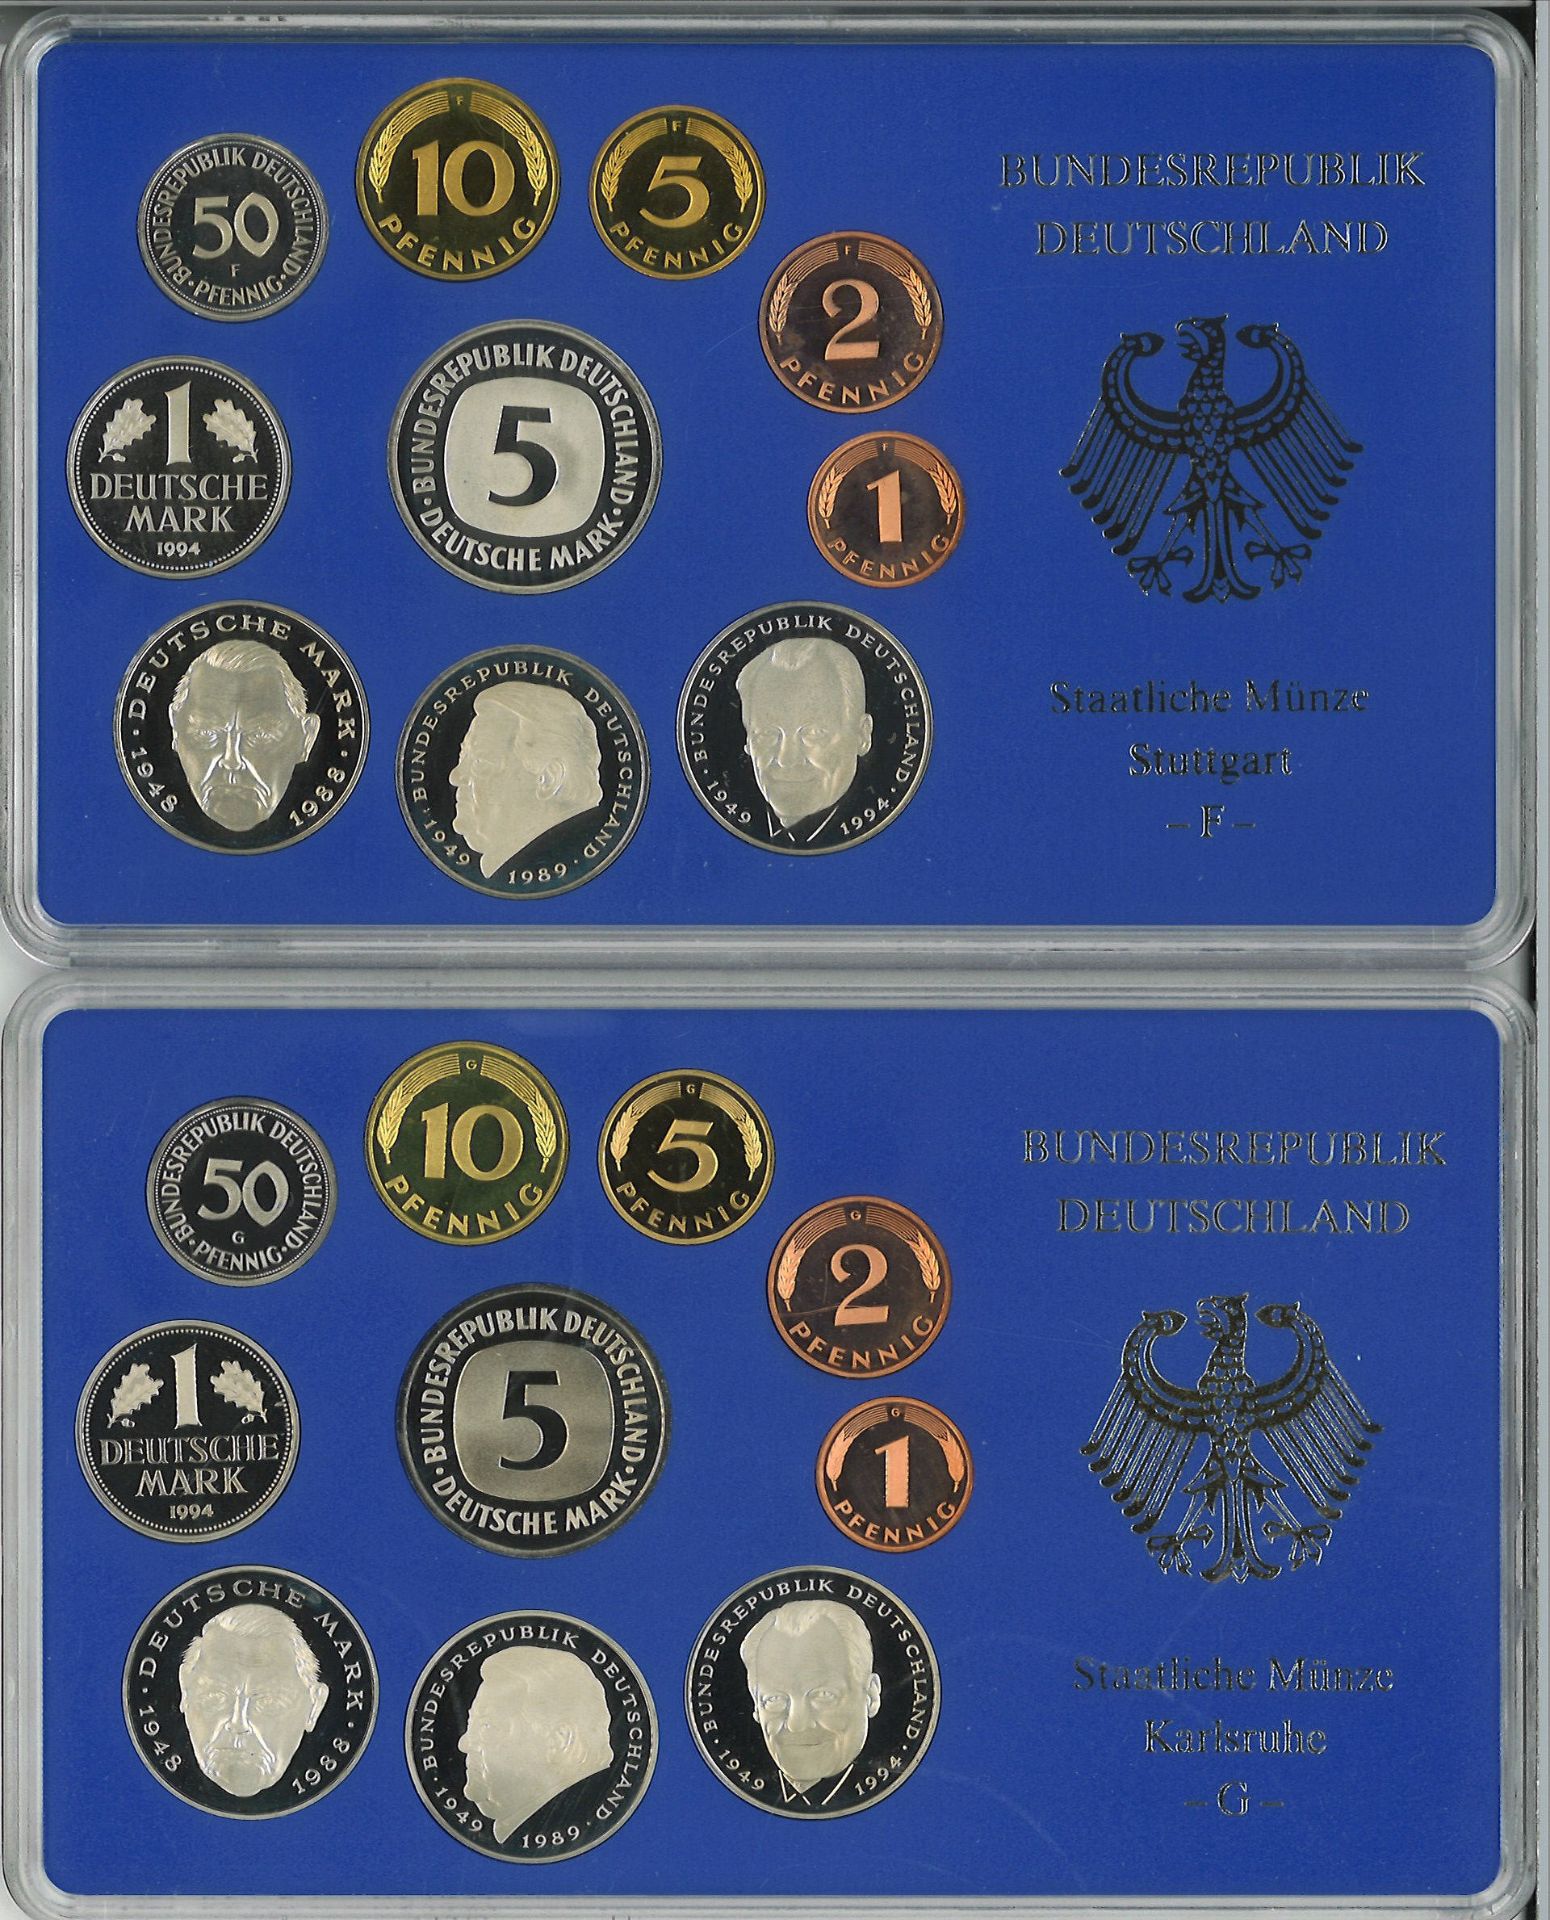 BRD Münzsets Jahrgang 1994, A, D, F, G und J. Im Original Blister. - Bild 4 aus 6